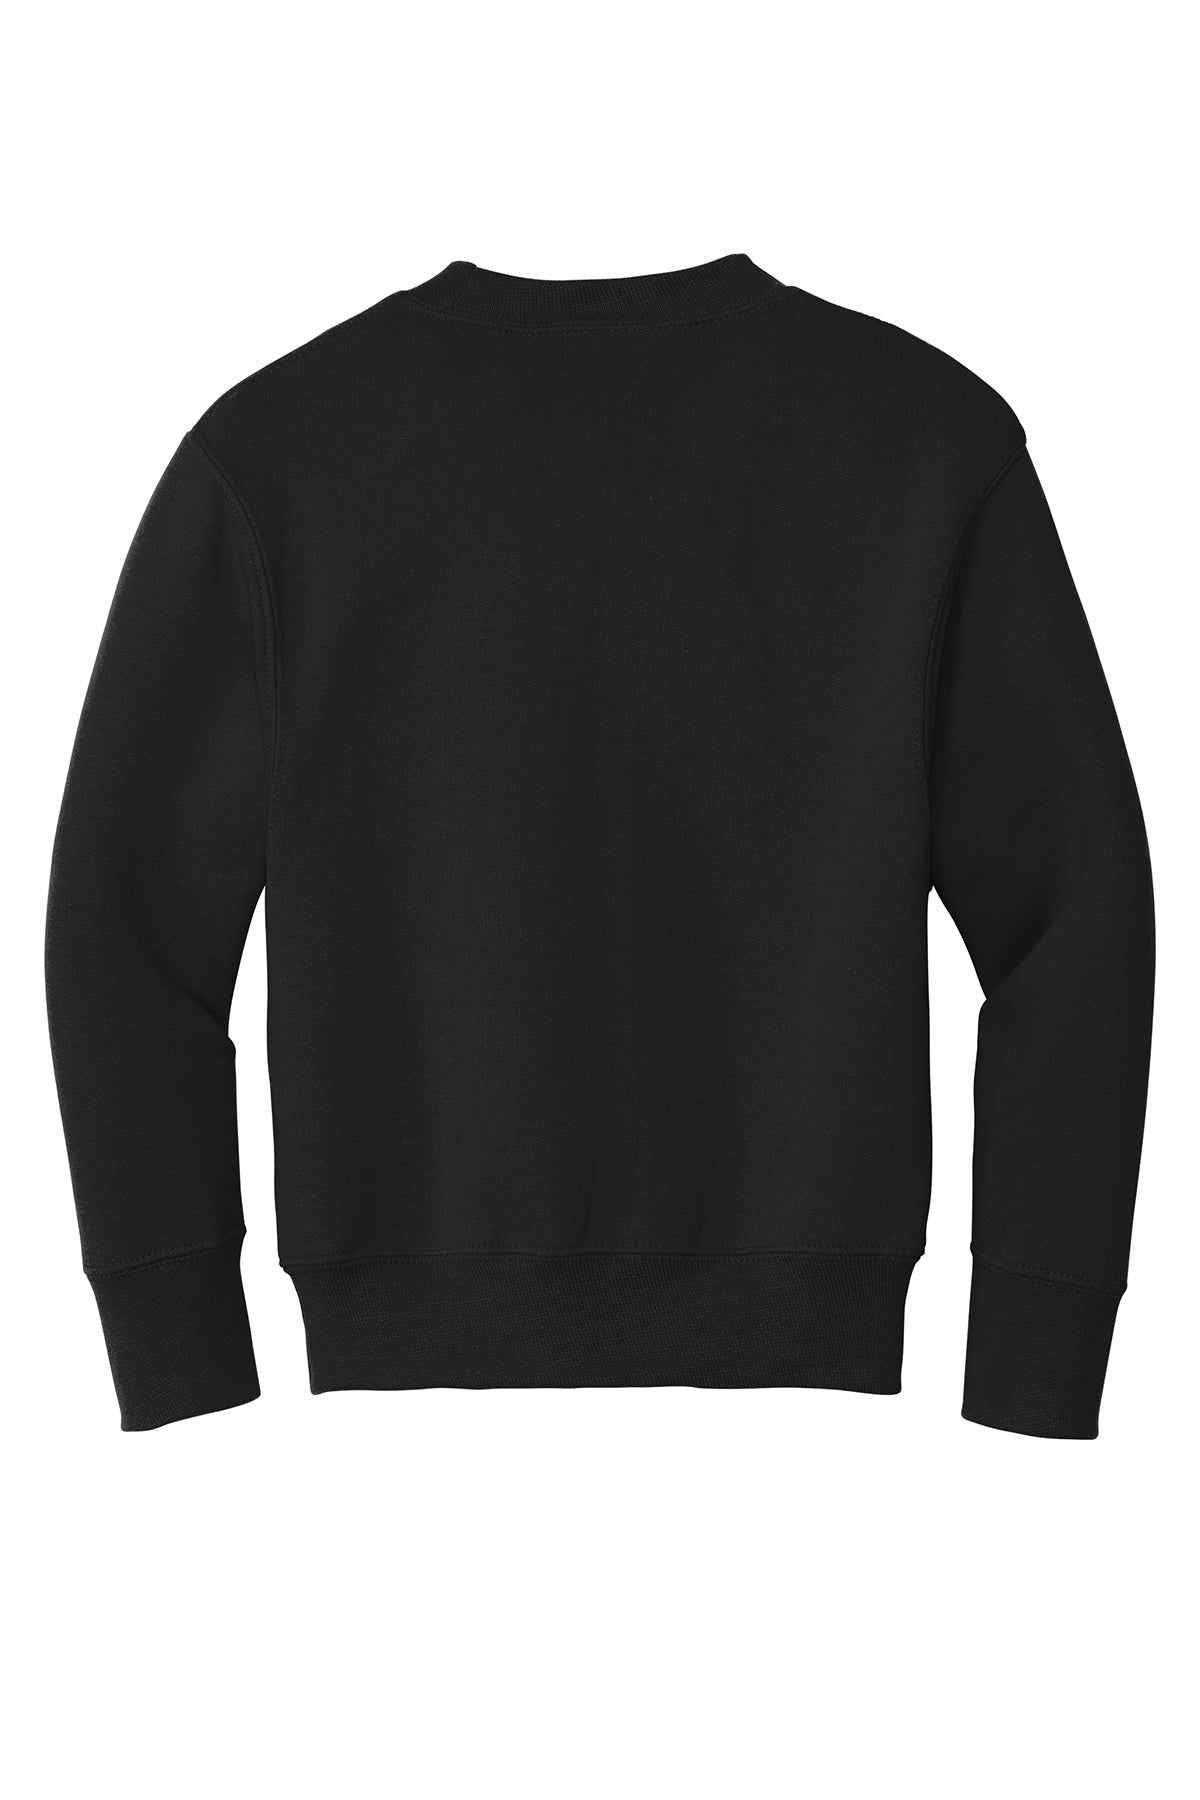 NEW STRAYER Port & Company® Youth Core Fleece Crewneck Sweatshirt - BLACK